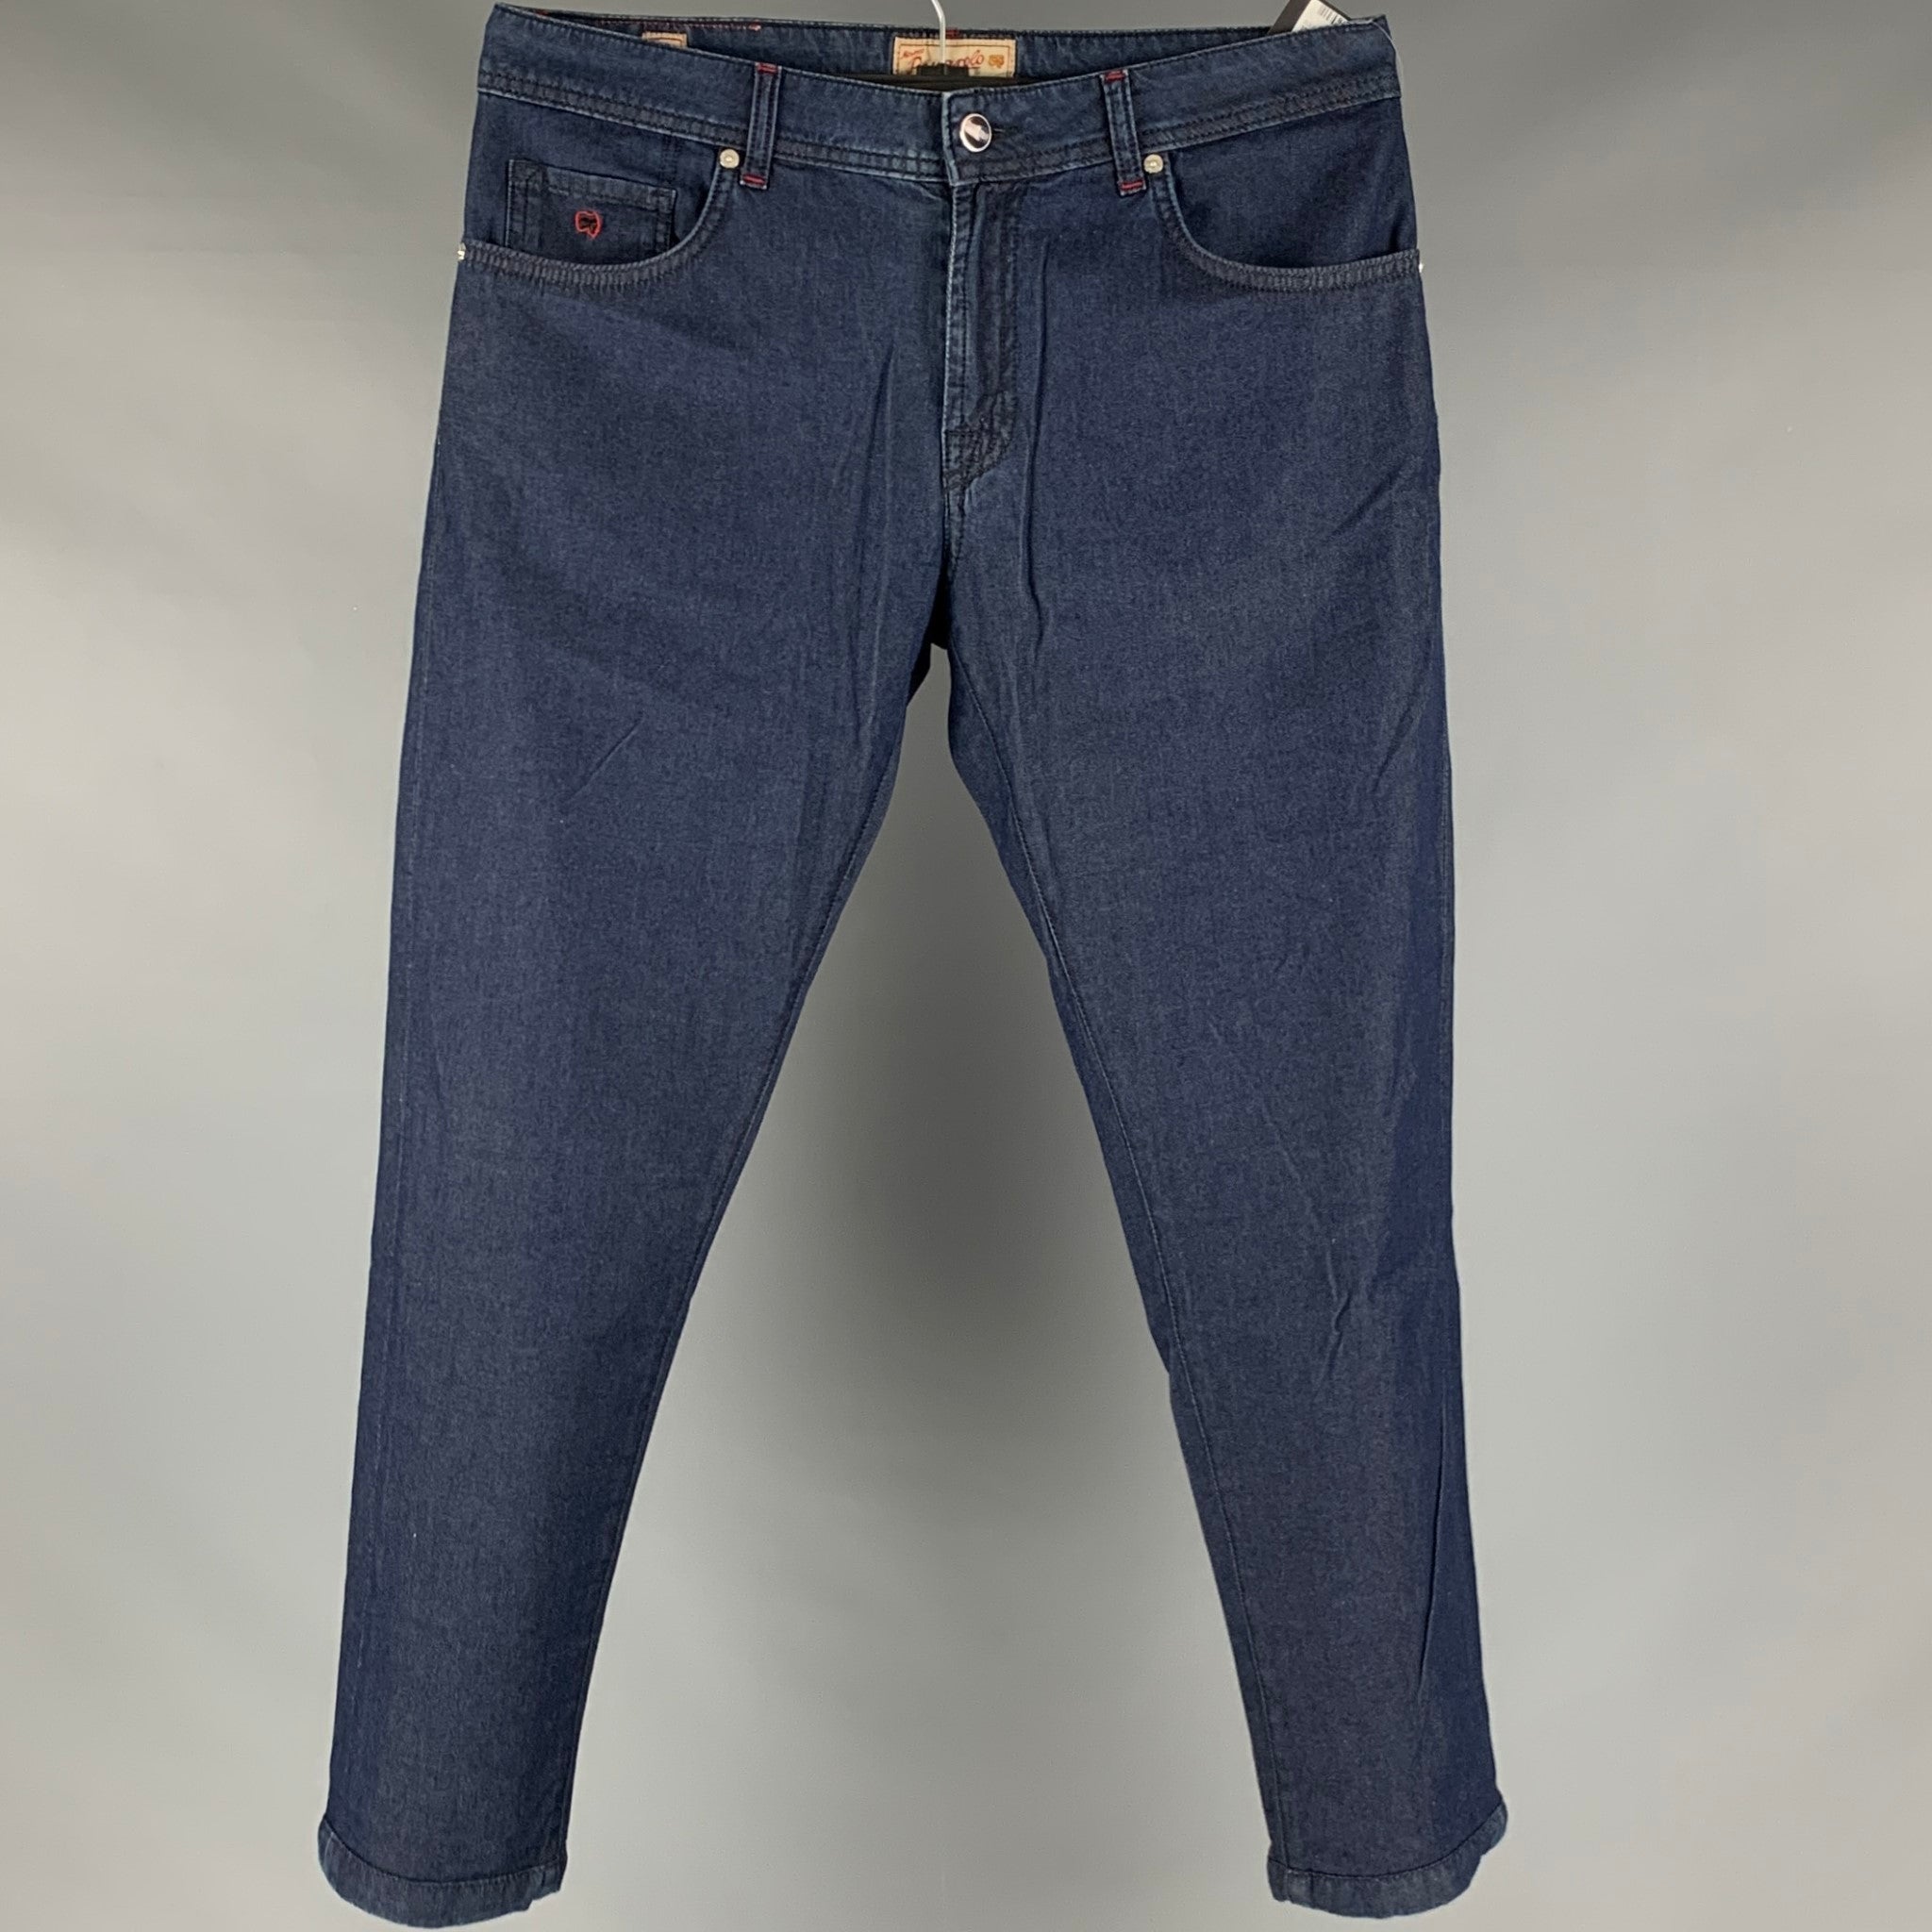 Buy Lee Bruce Grey Solid Skinny Fit Jeans for Men | Lee India